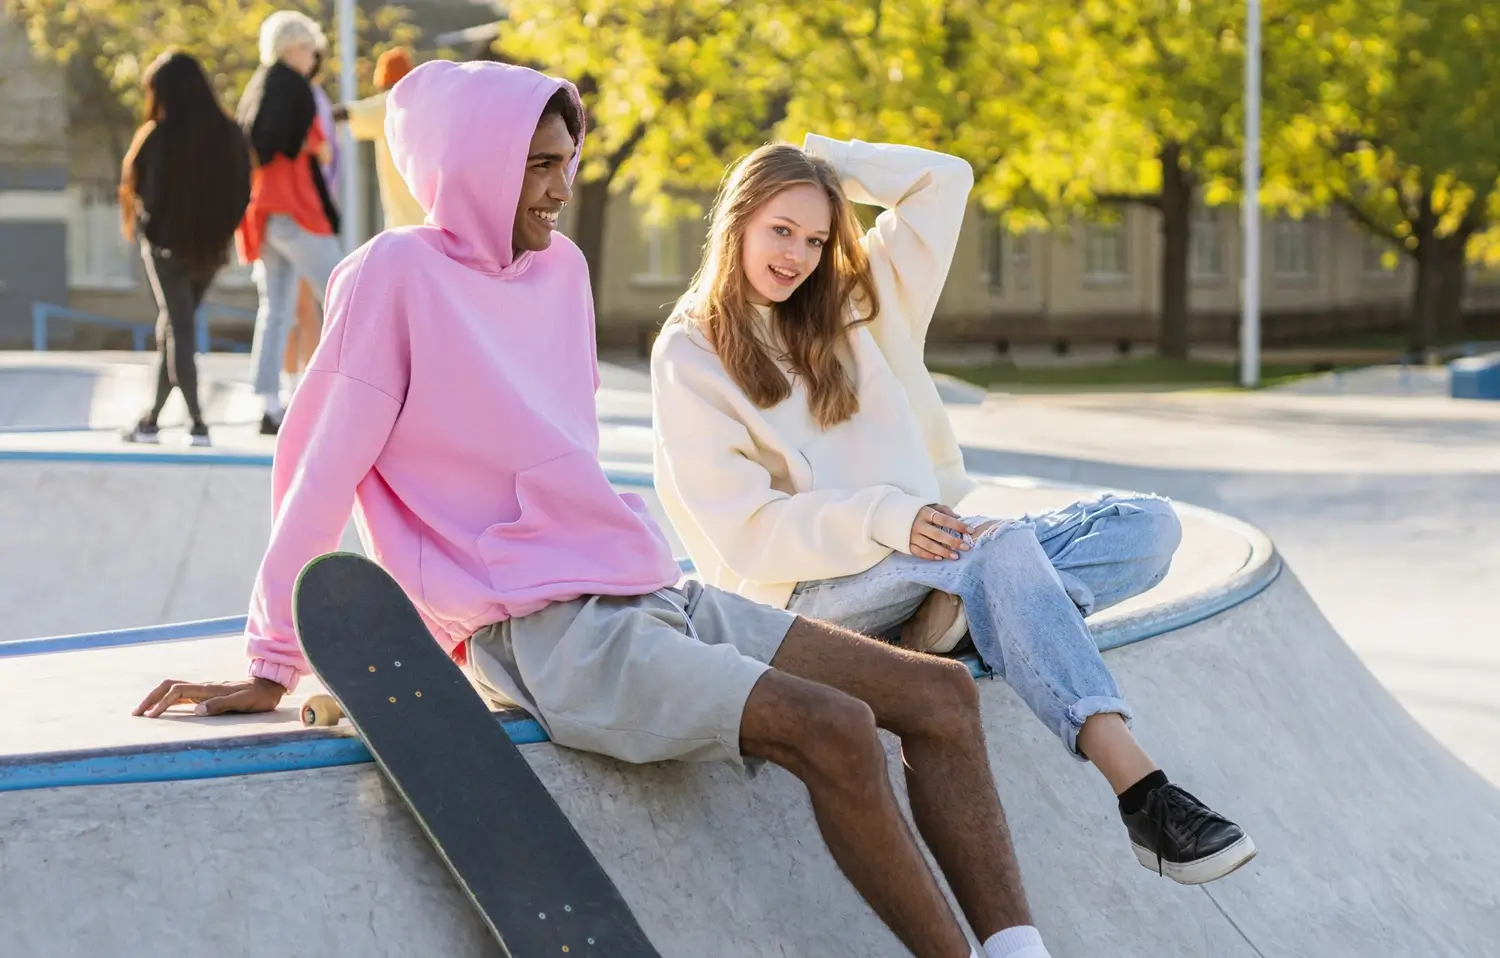 Stylish cool teens wearing hoodies gather at urban skate park